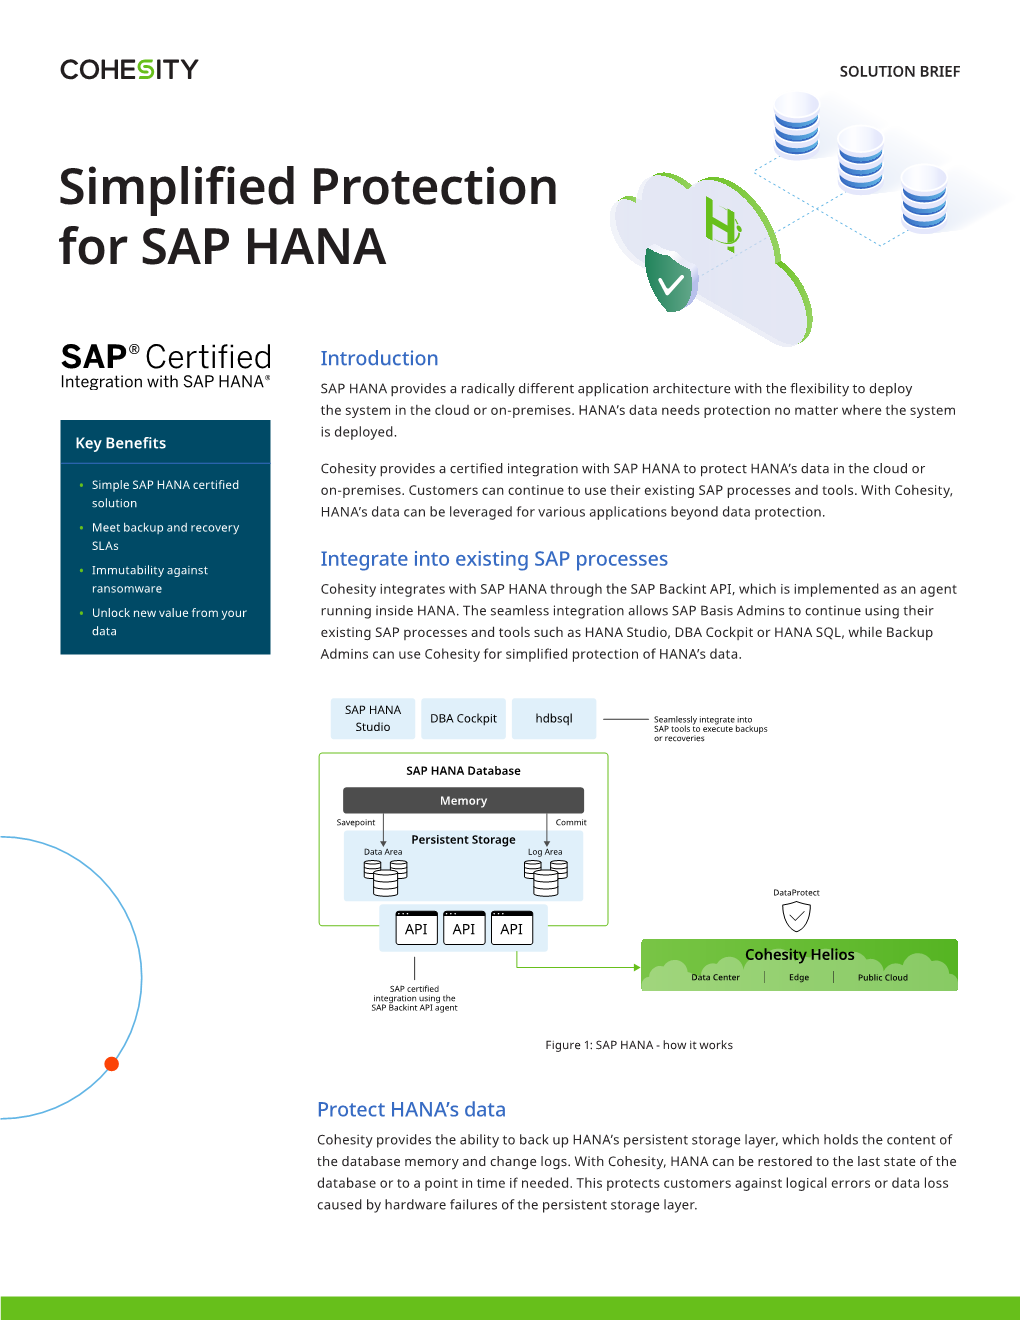 Simplified Protection for SAP HANA